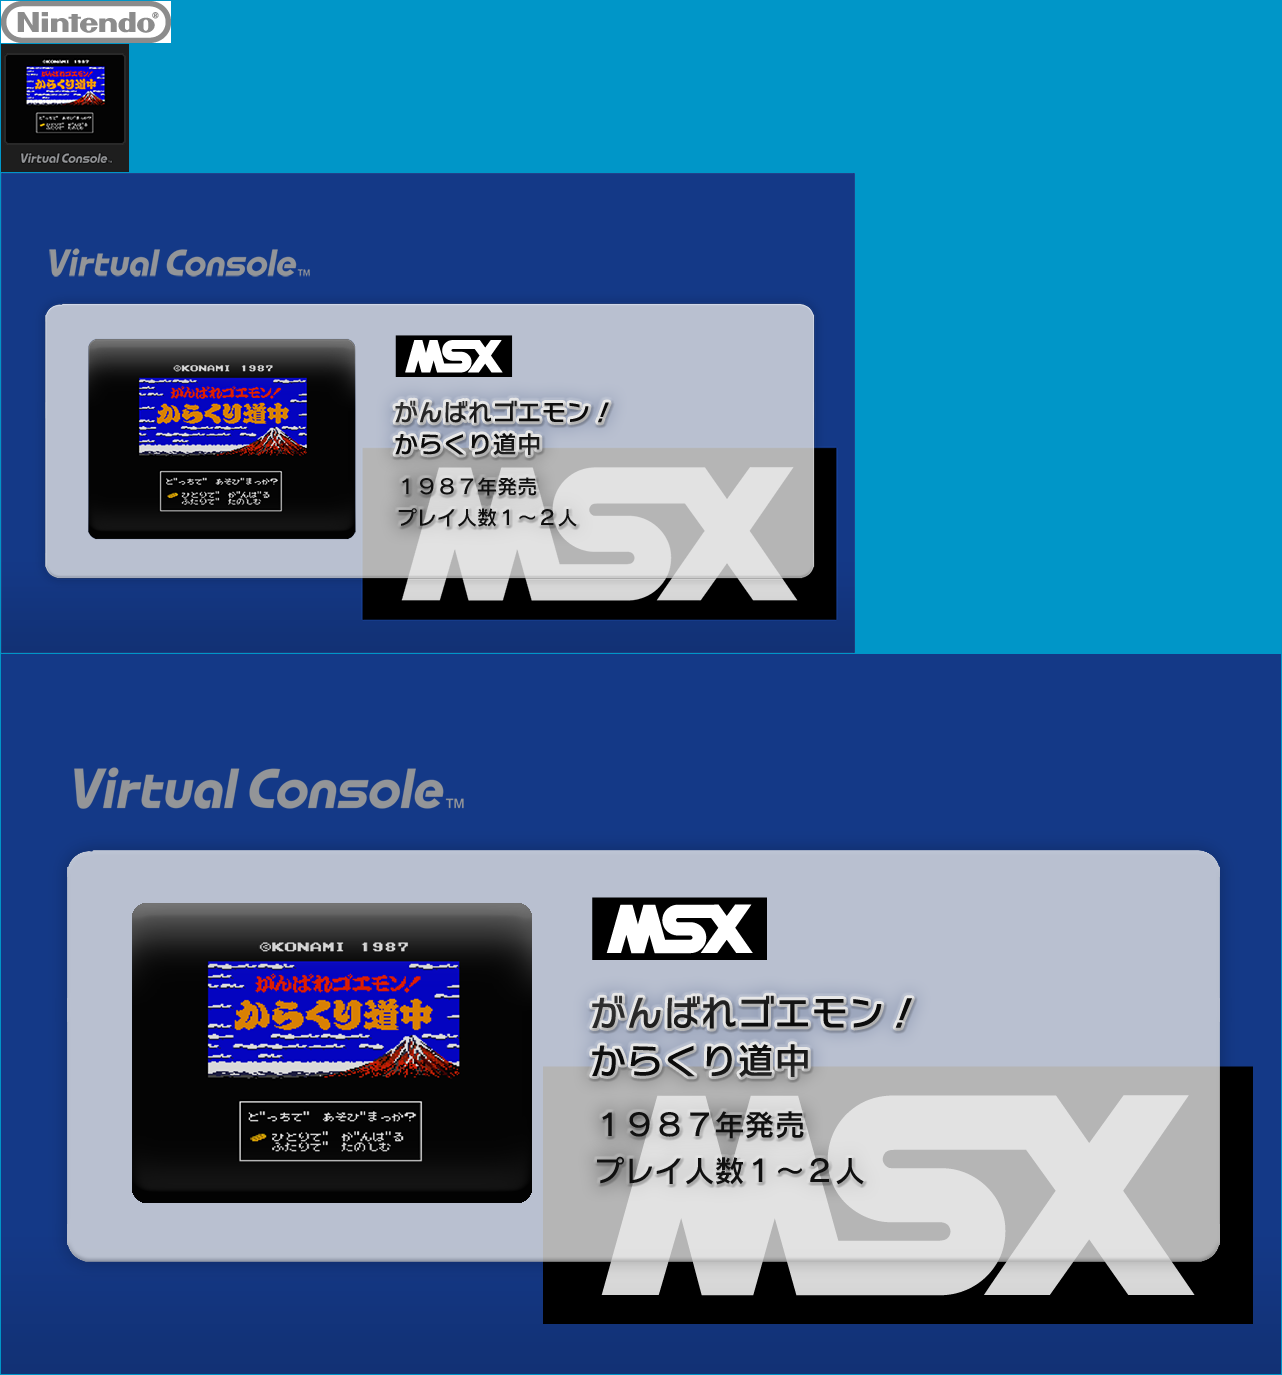 Virtual Console - Ganbare Goemon! Karakuri Dōchū